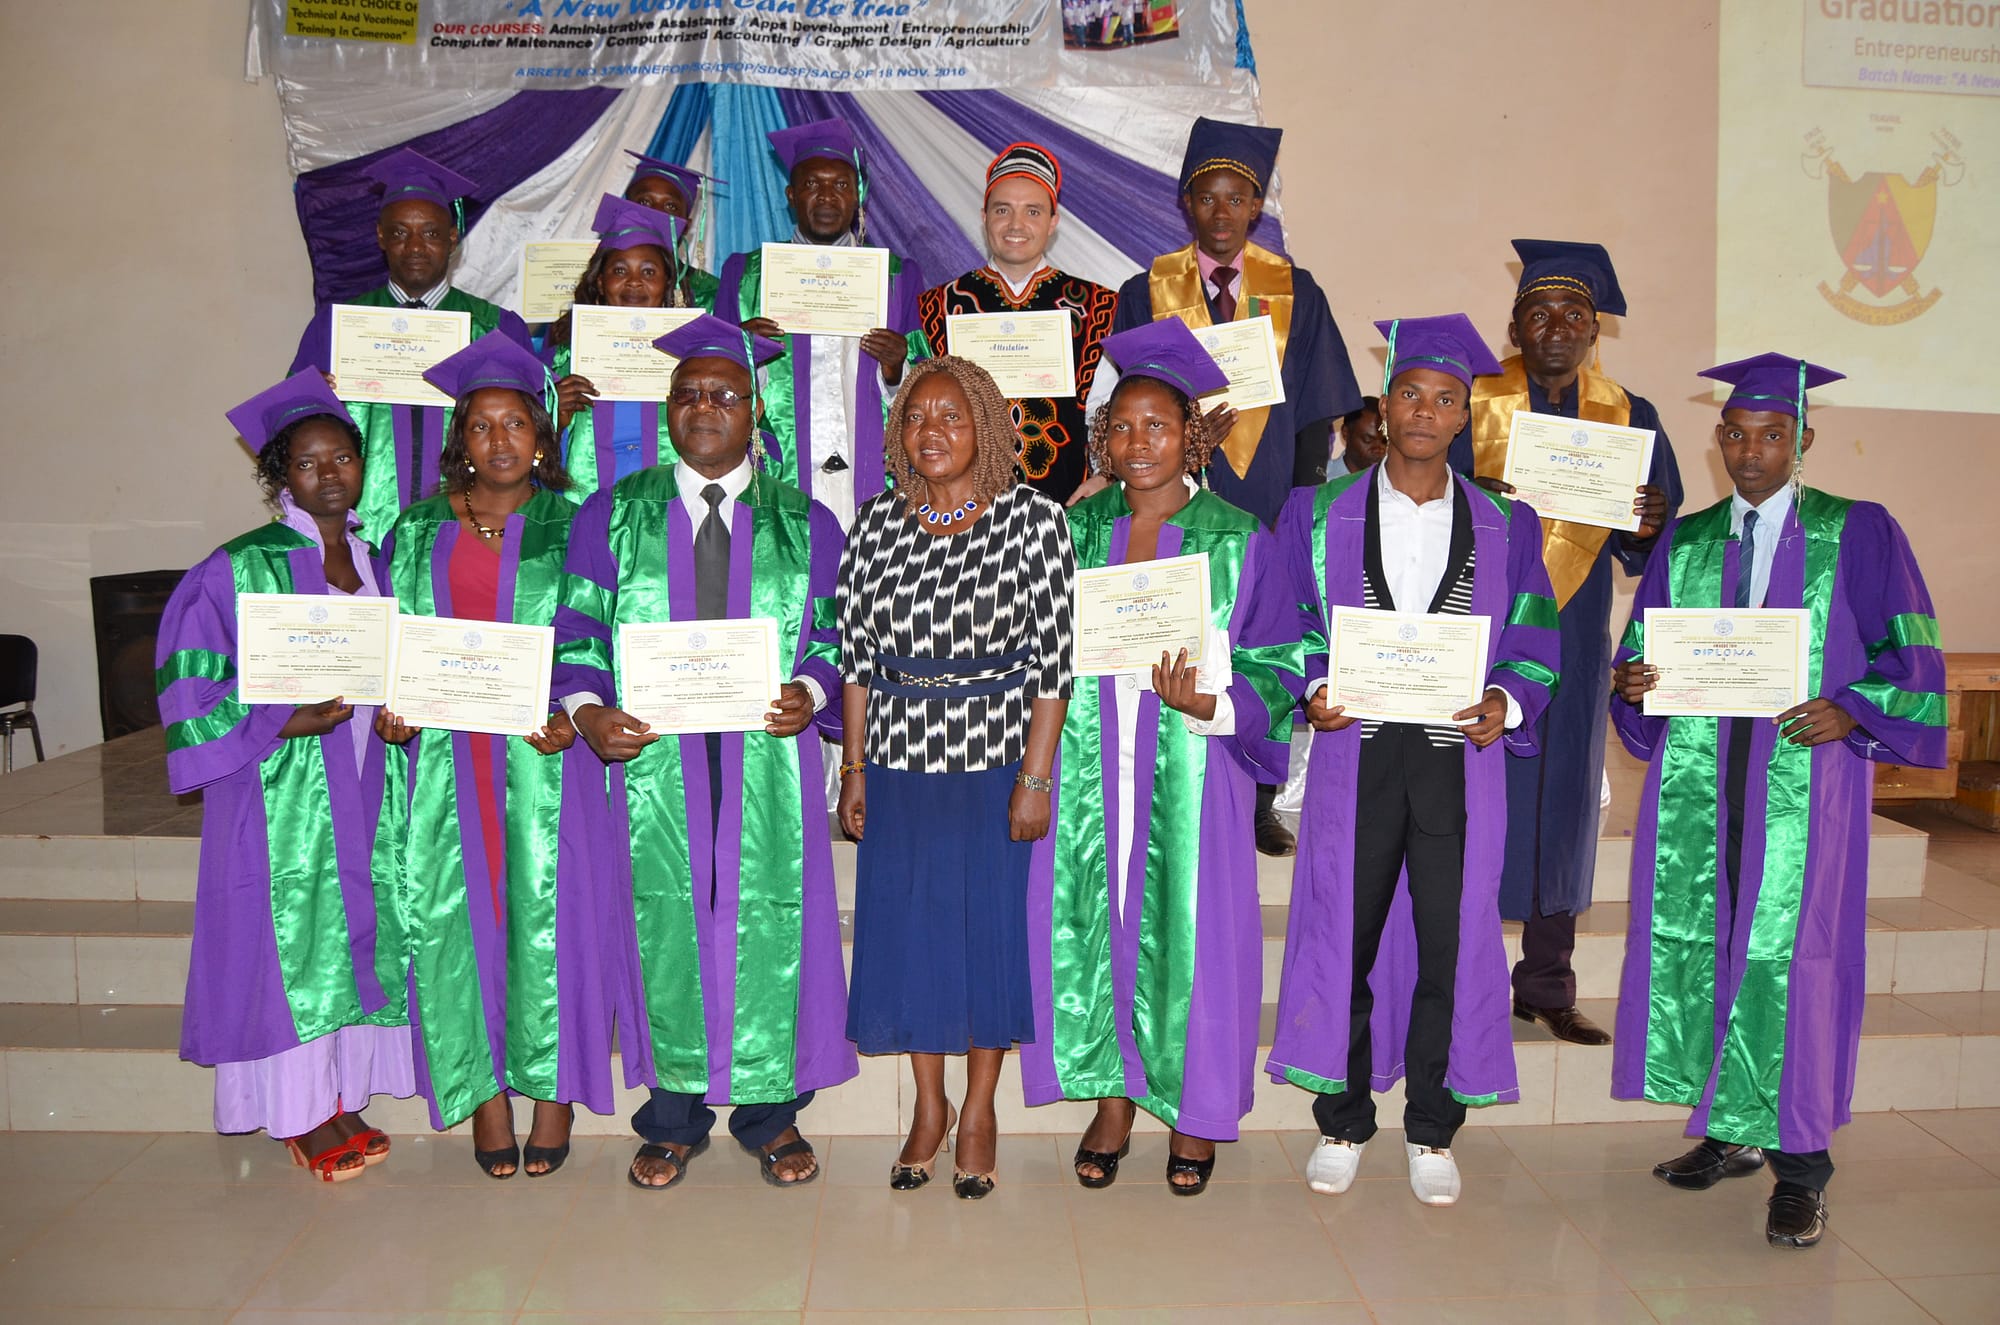 The proud graduates of the Tobby Vision Entrepreneurship Course.